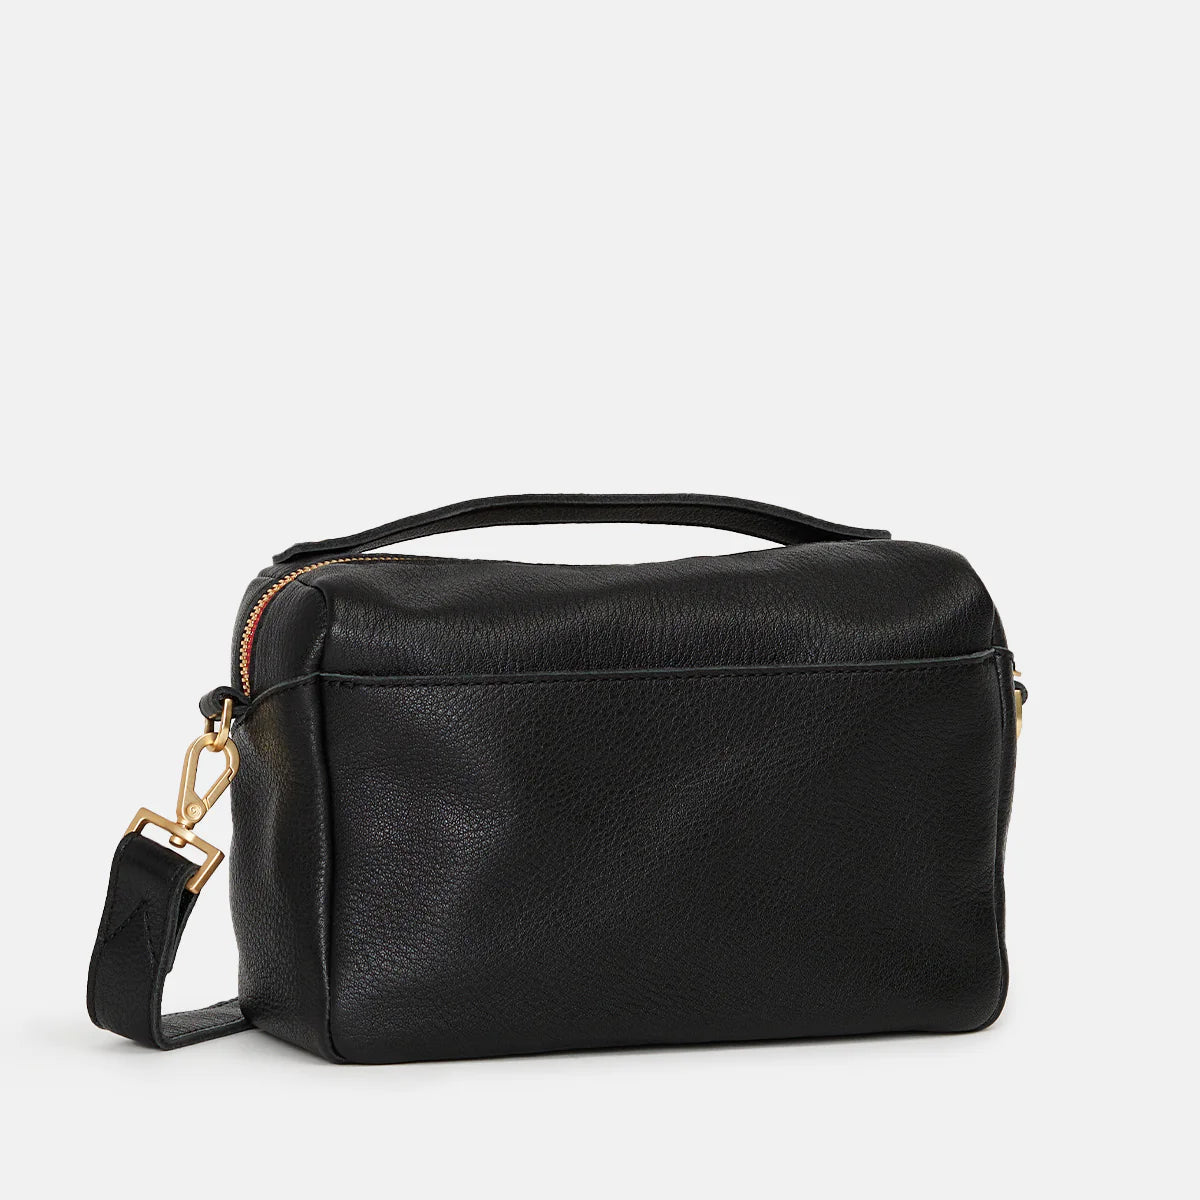 Hammit Evan Crossbody Black Red Zip leather purse 